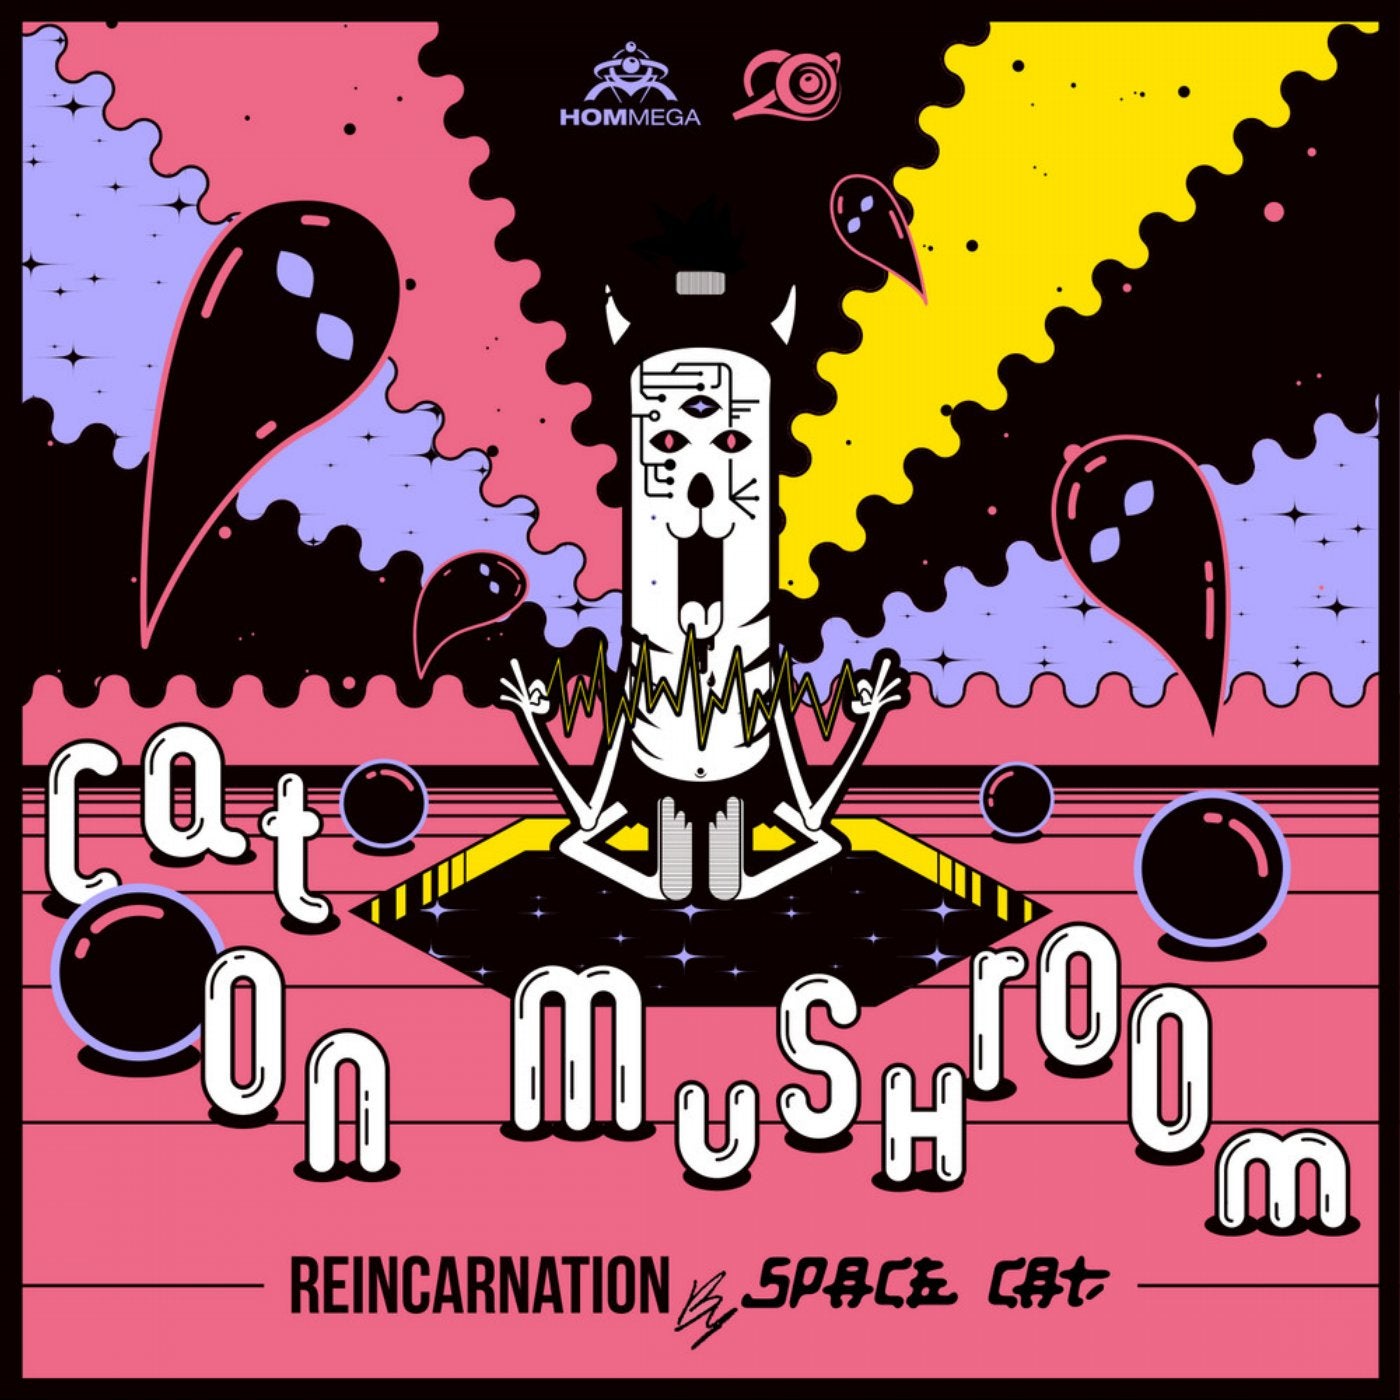 Reincarnation (Space Cat 2017 Remake)